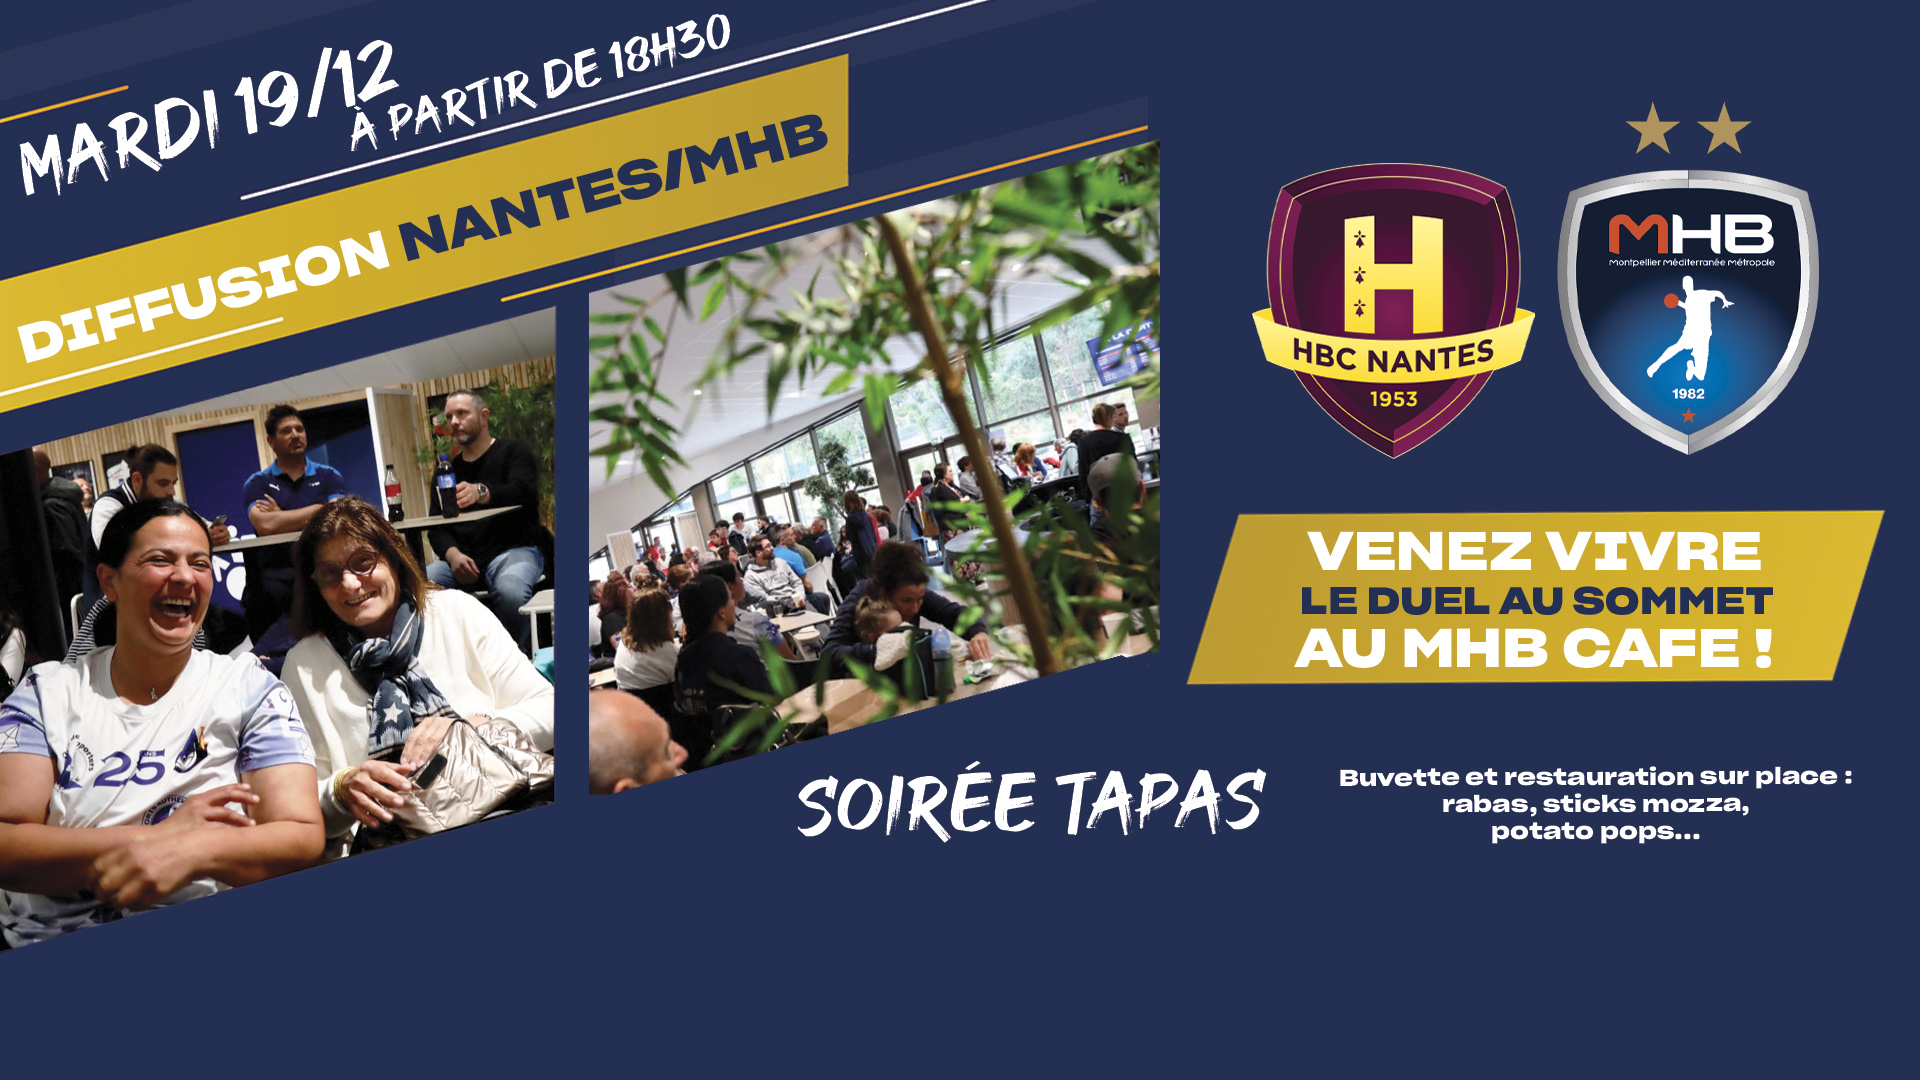 Rendez-vous au MHB Café mardi soir pour Nantes / MHB !